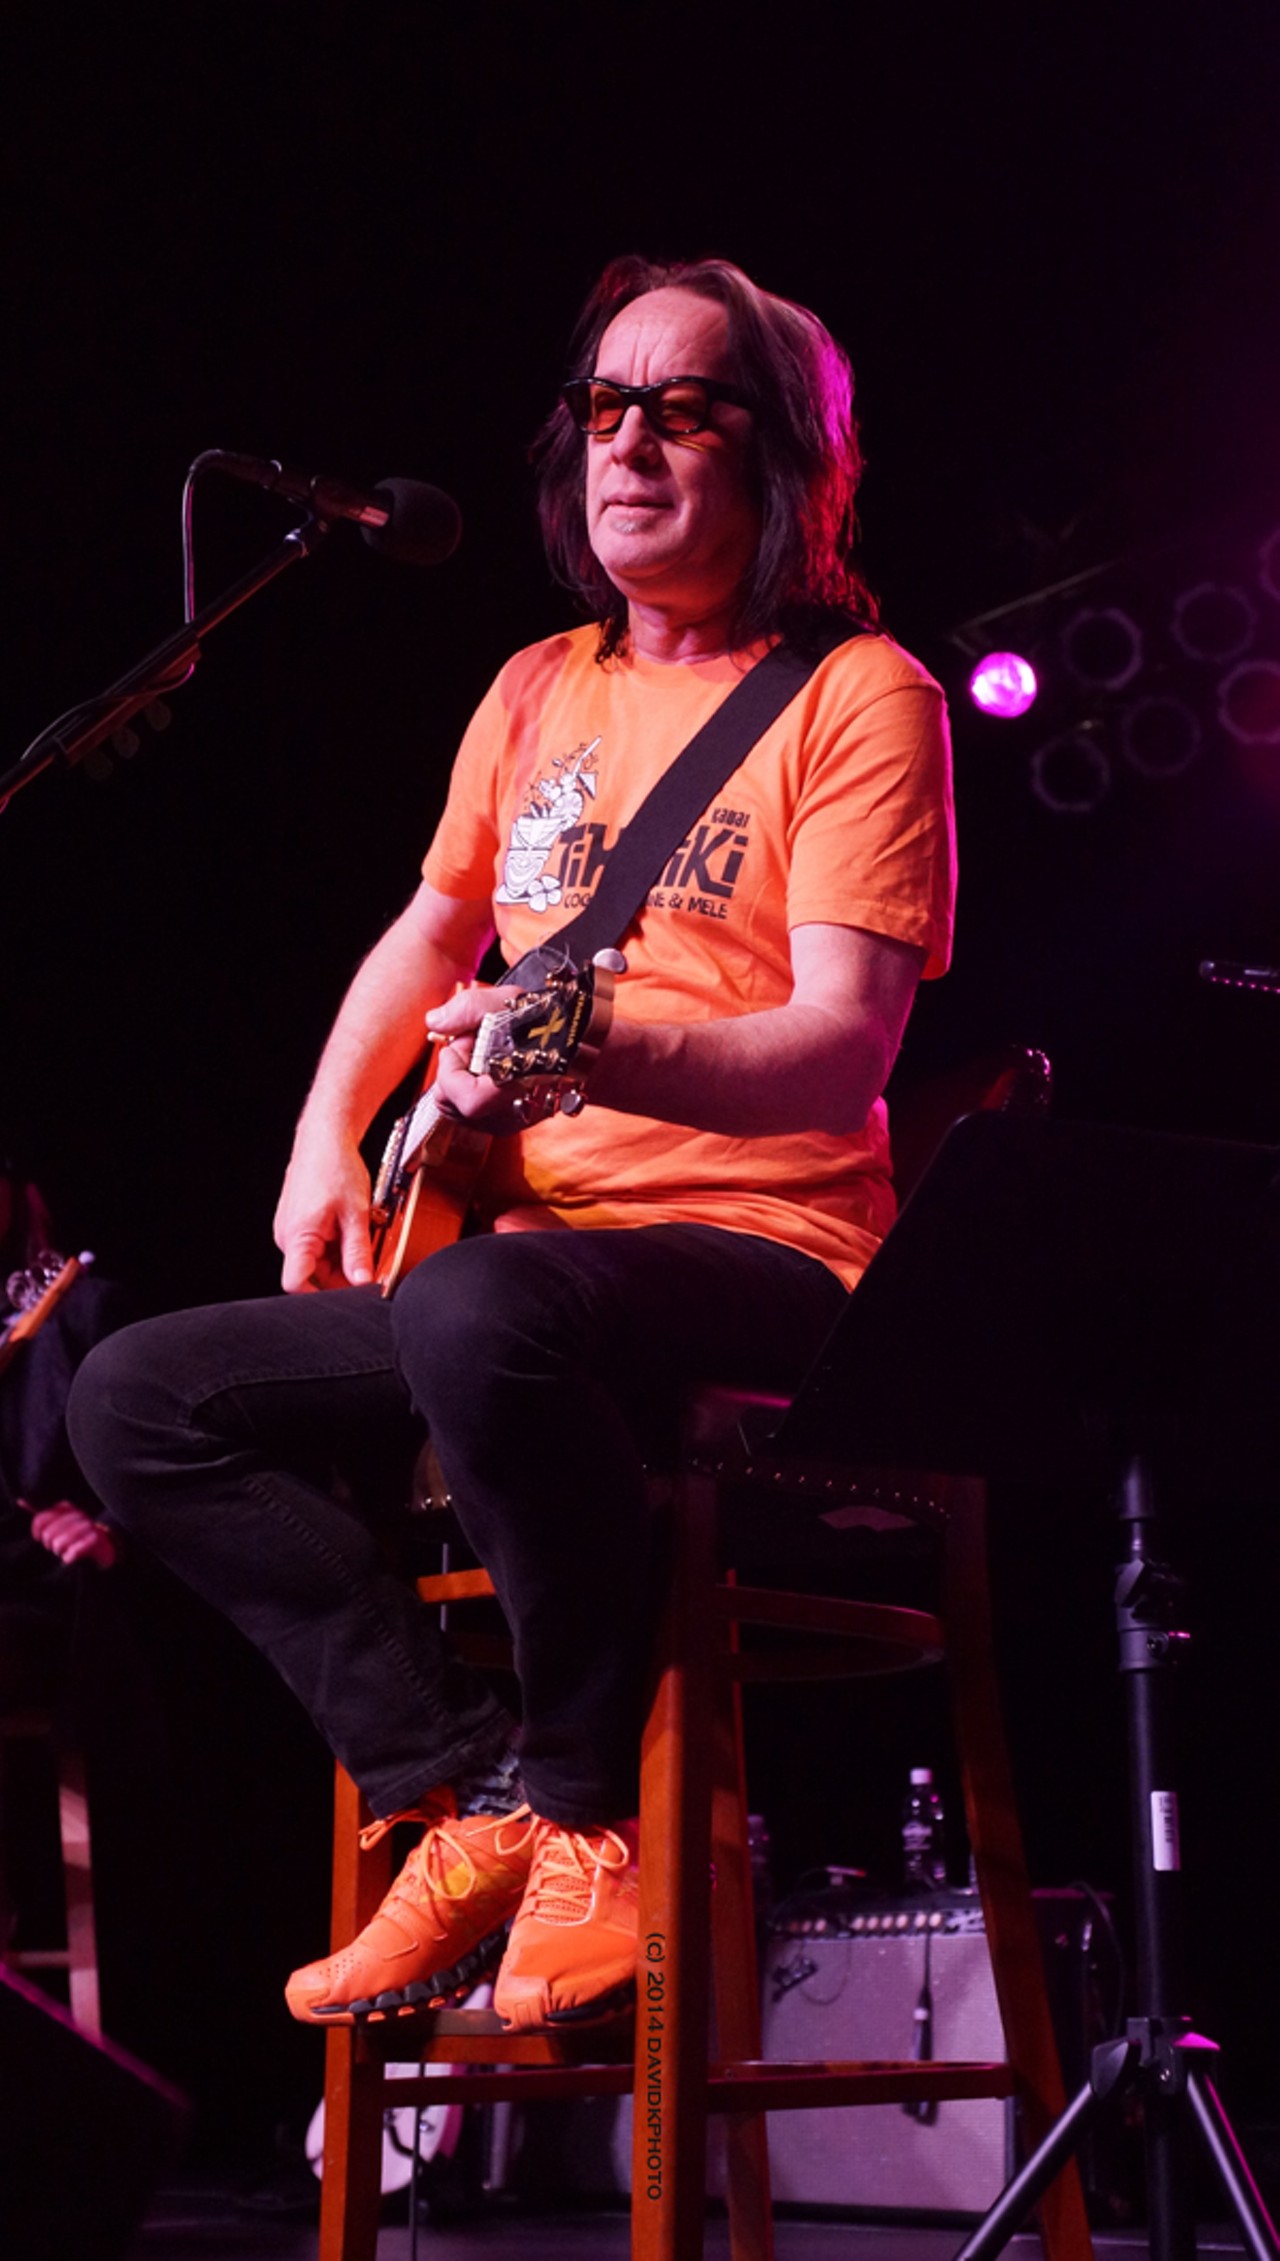 Todd Rundgren performing at Hard Rock Live